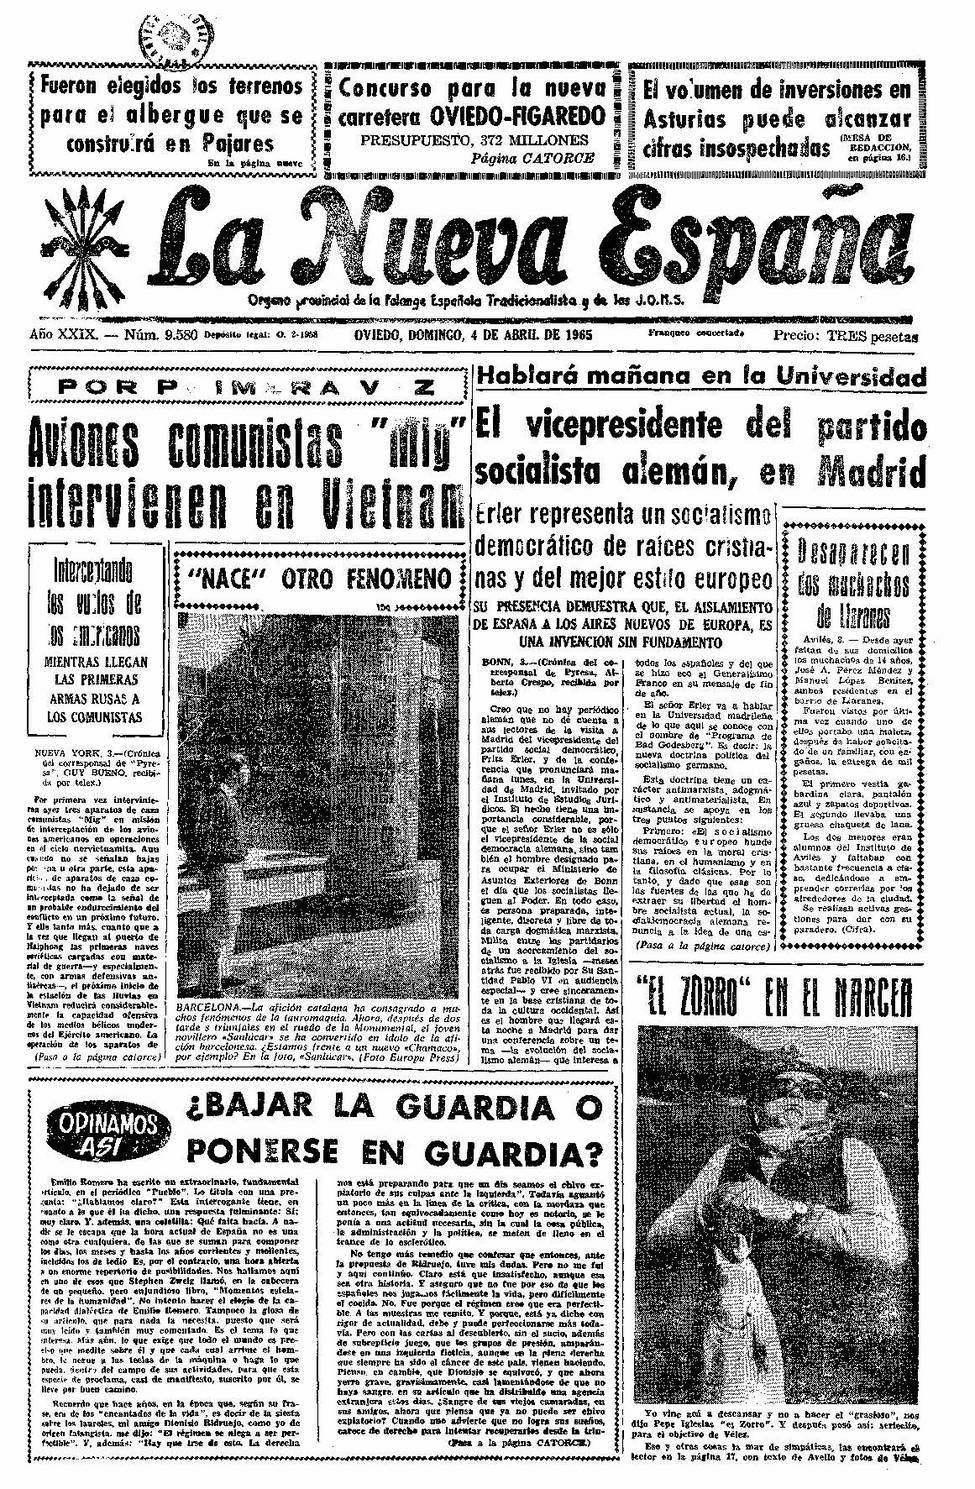 Portada del Domingo, 4 de Abril de 1965